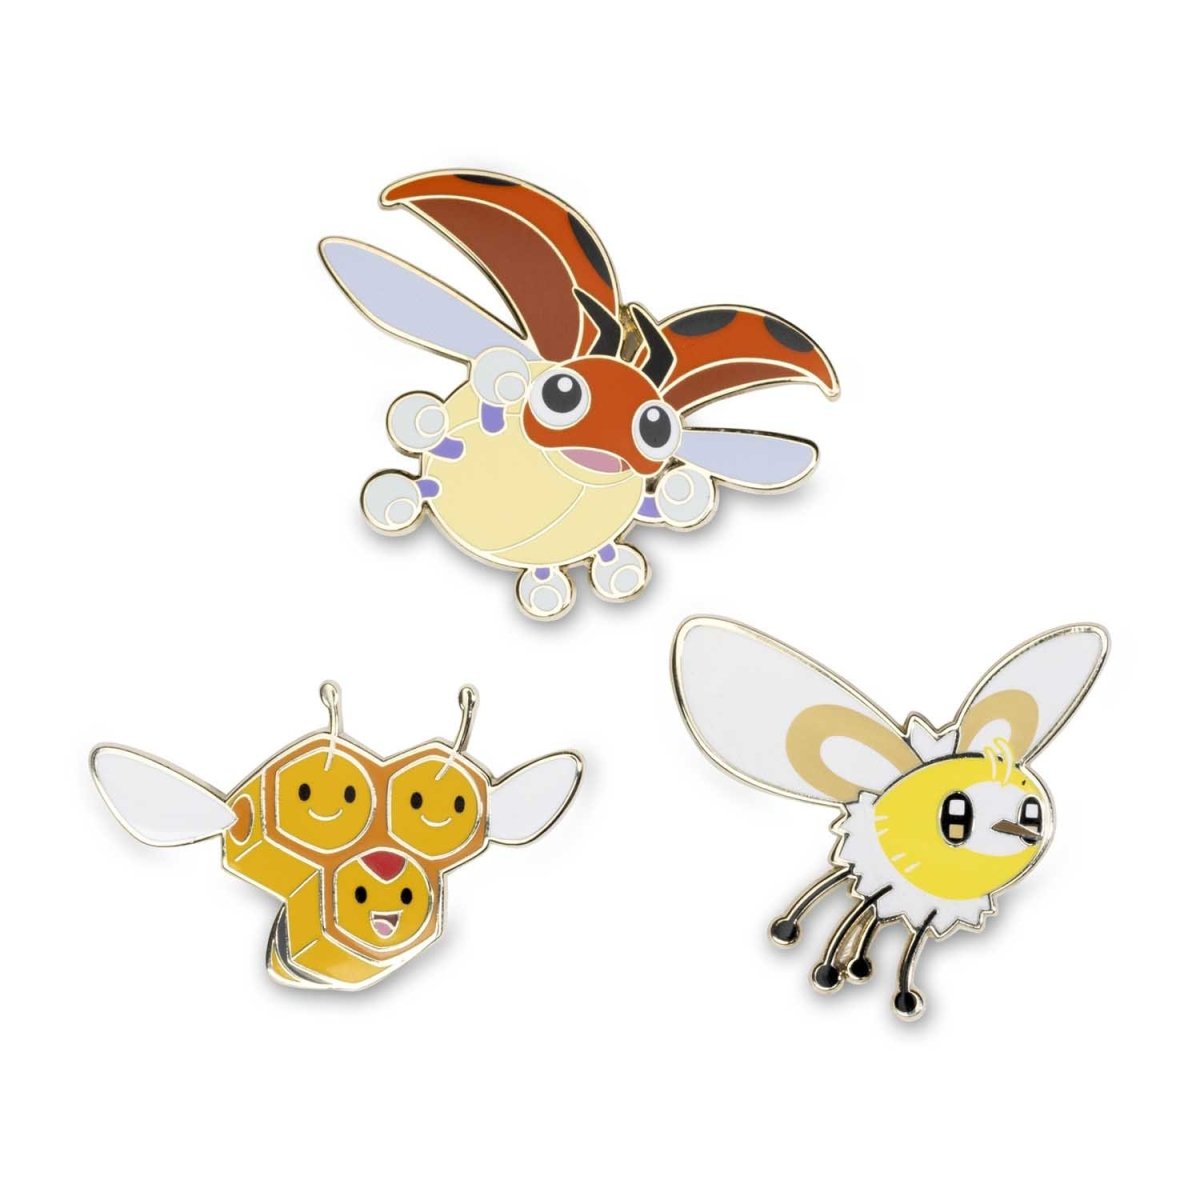 Ledyba, Combee & Cutiefly Pokémon Pins (3-Pack)